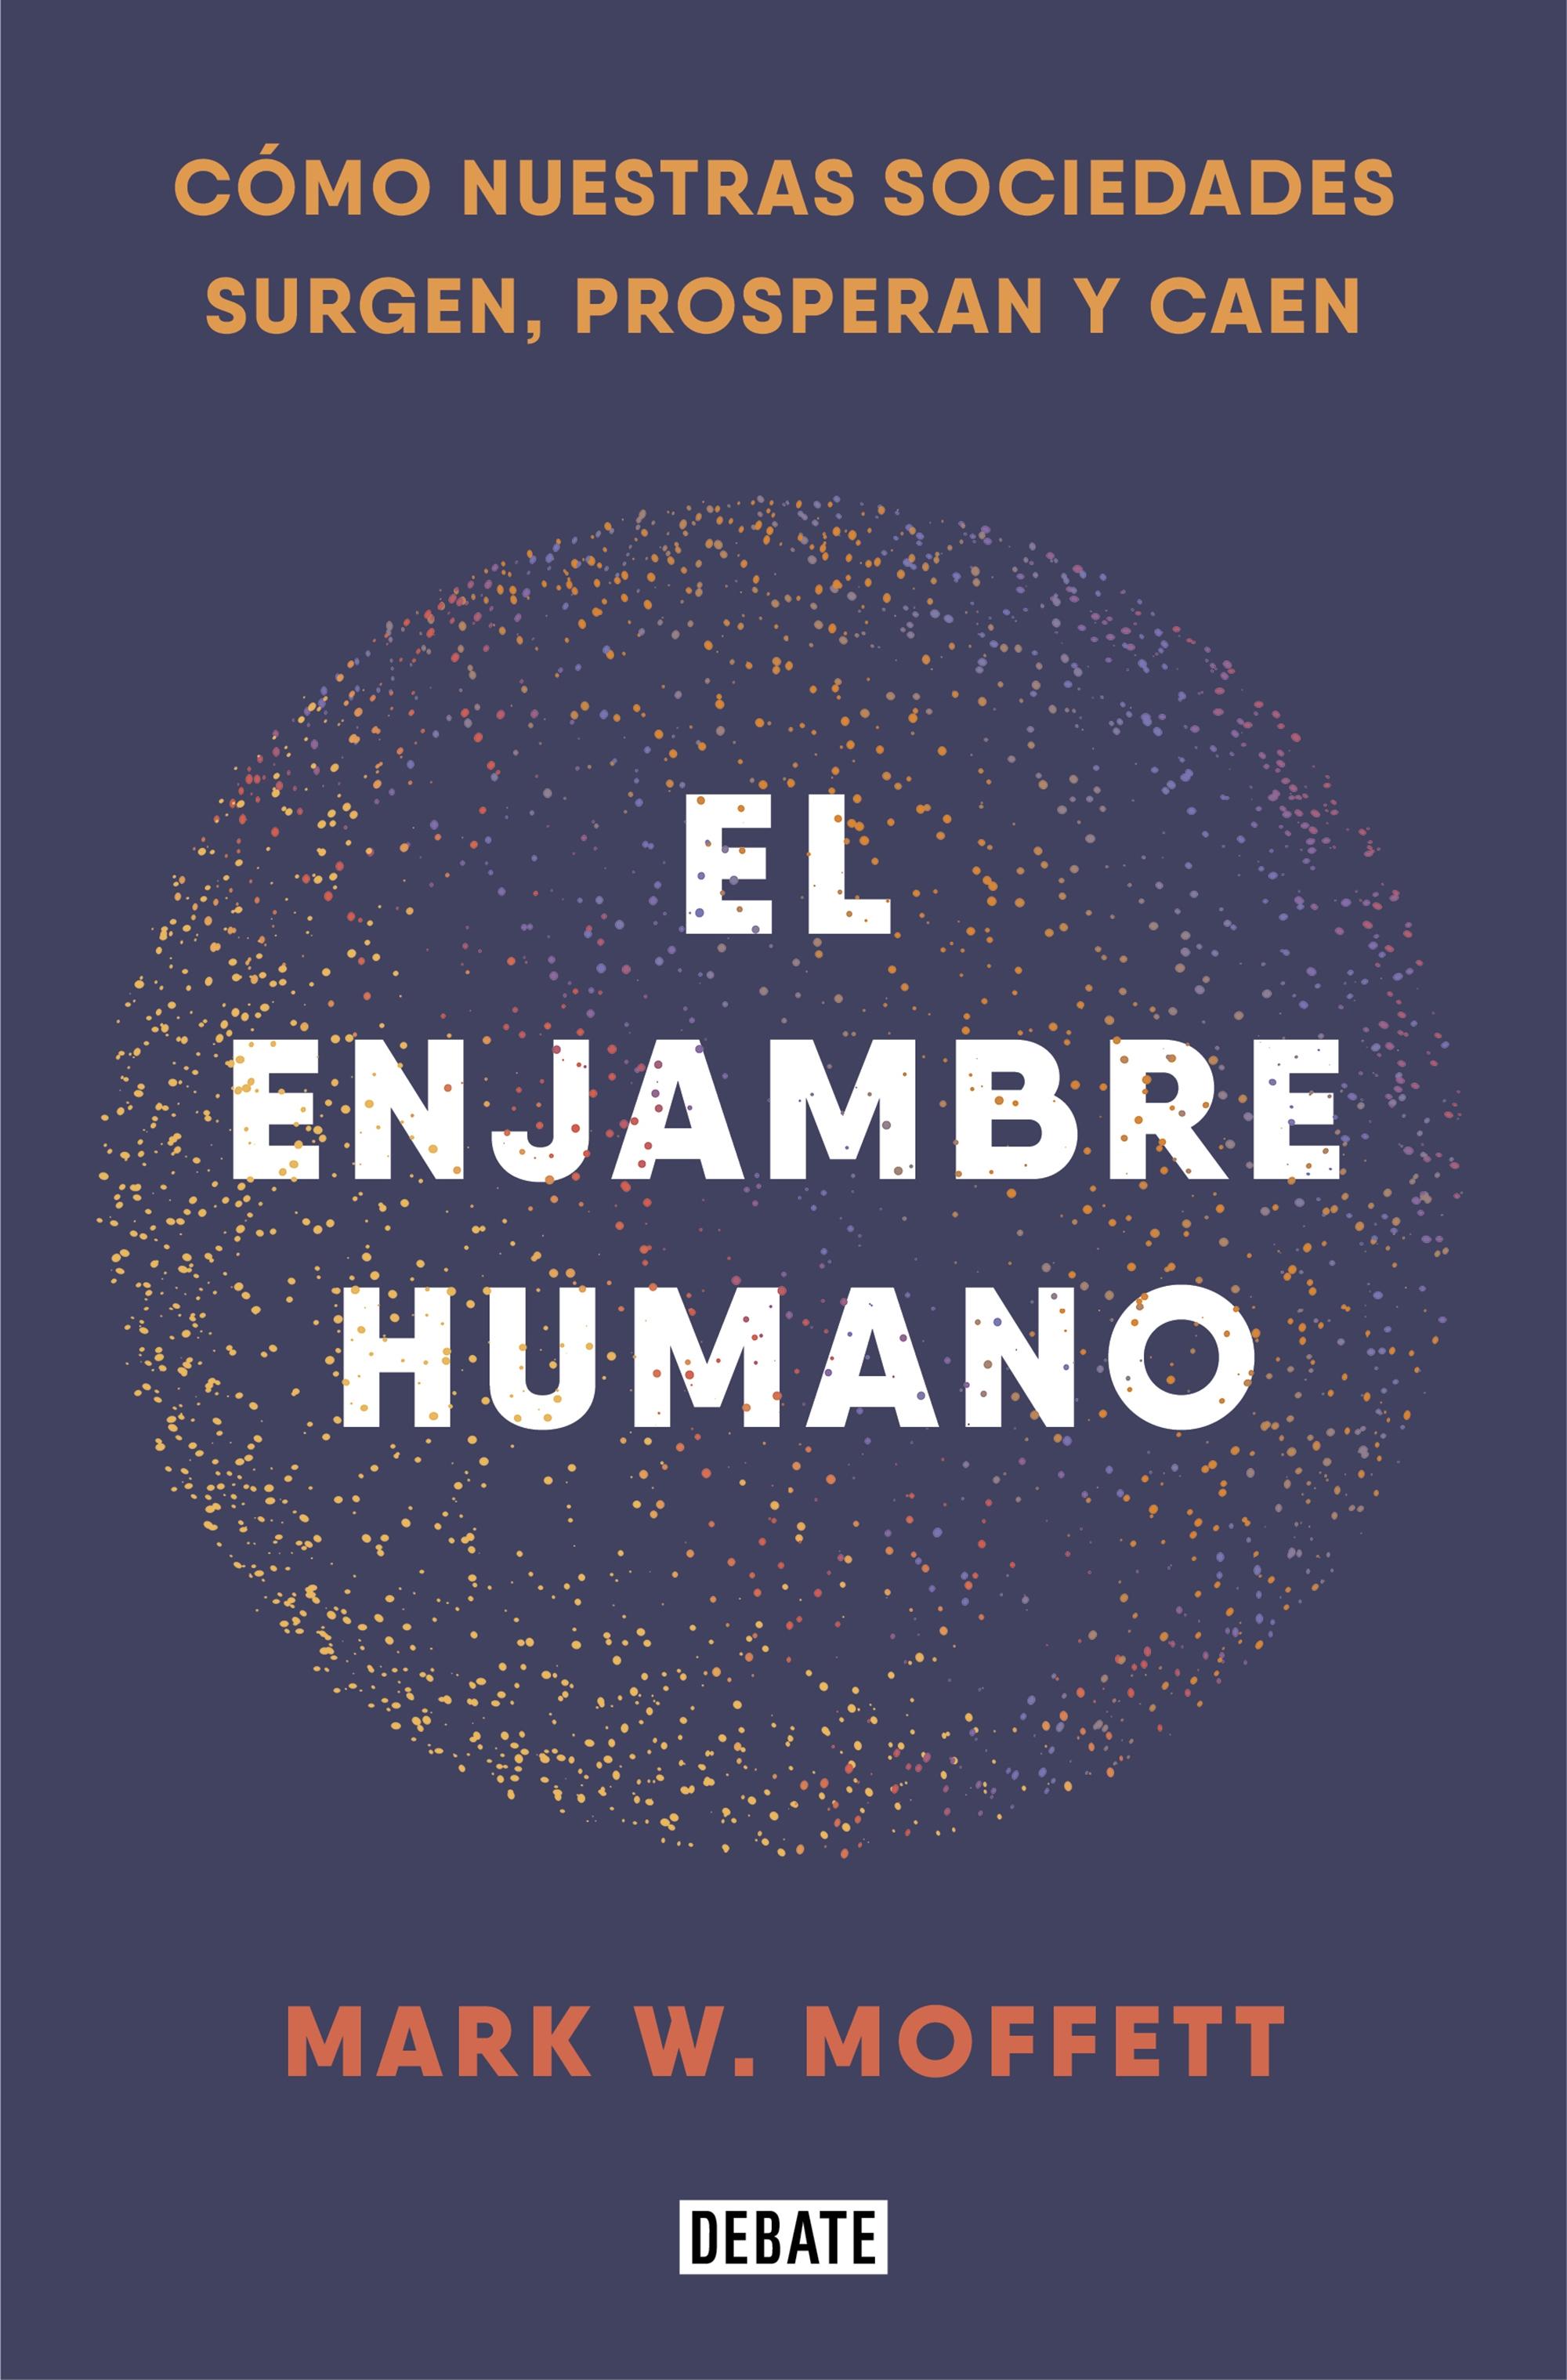 El Enjambre Humano "How Societies Arise, Thrive, And Fail"